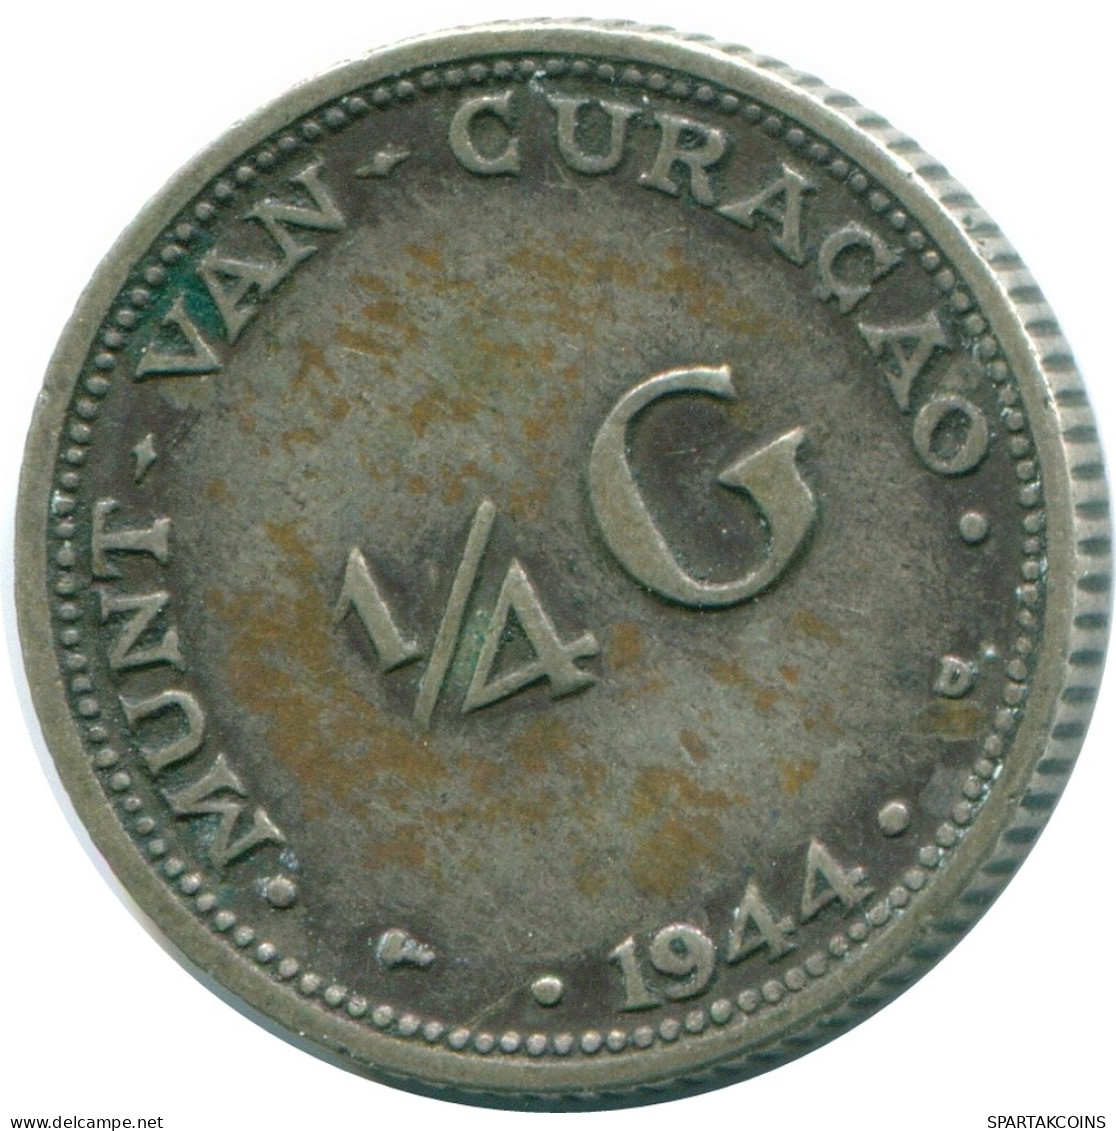 1/4 GULDEN 1944 CURACAO Netherlands SILVER Colonial Coin #NL10624.4.U - Curacao